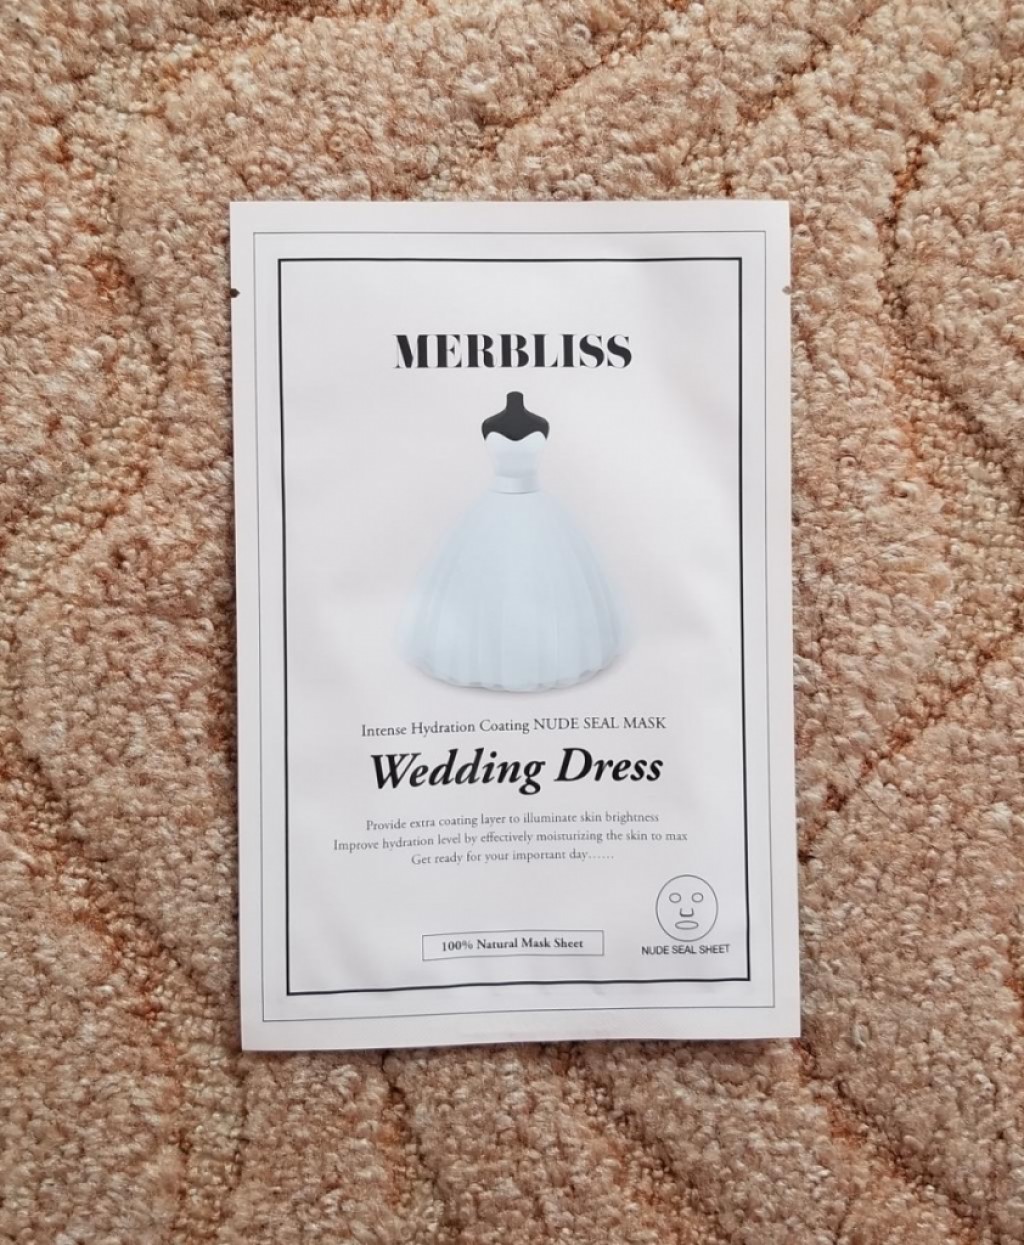 Merbliss Wedding Dress Nude Seal Mask Свадебная тканевая маска